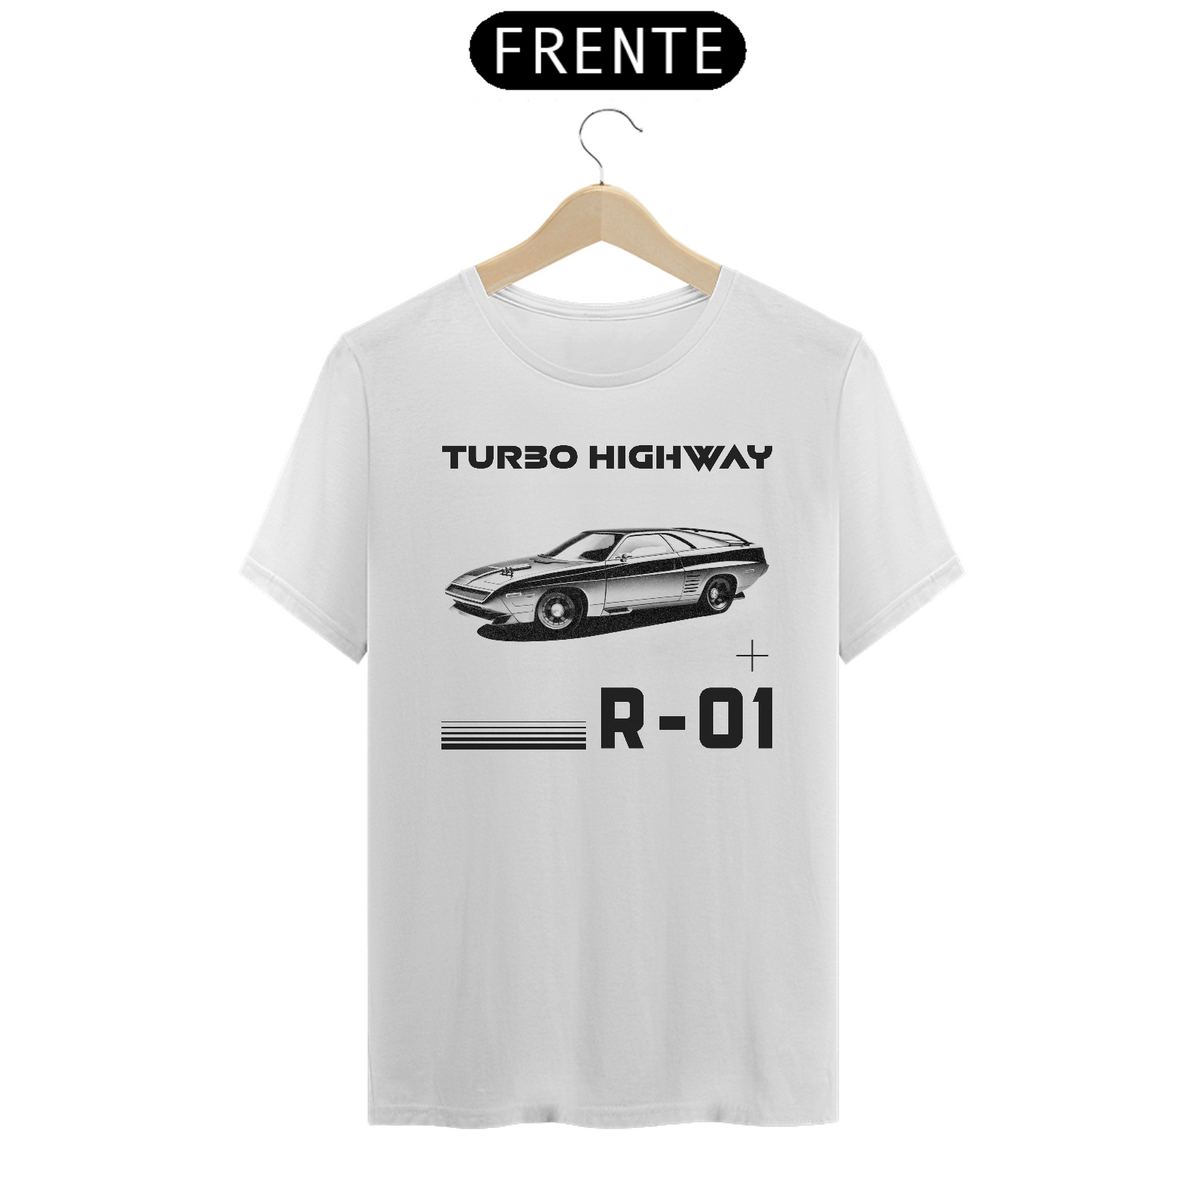 Nome do produto: Turbo Highway